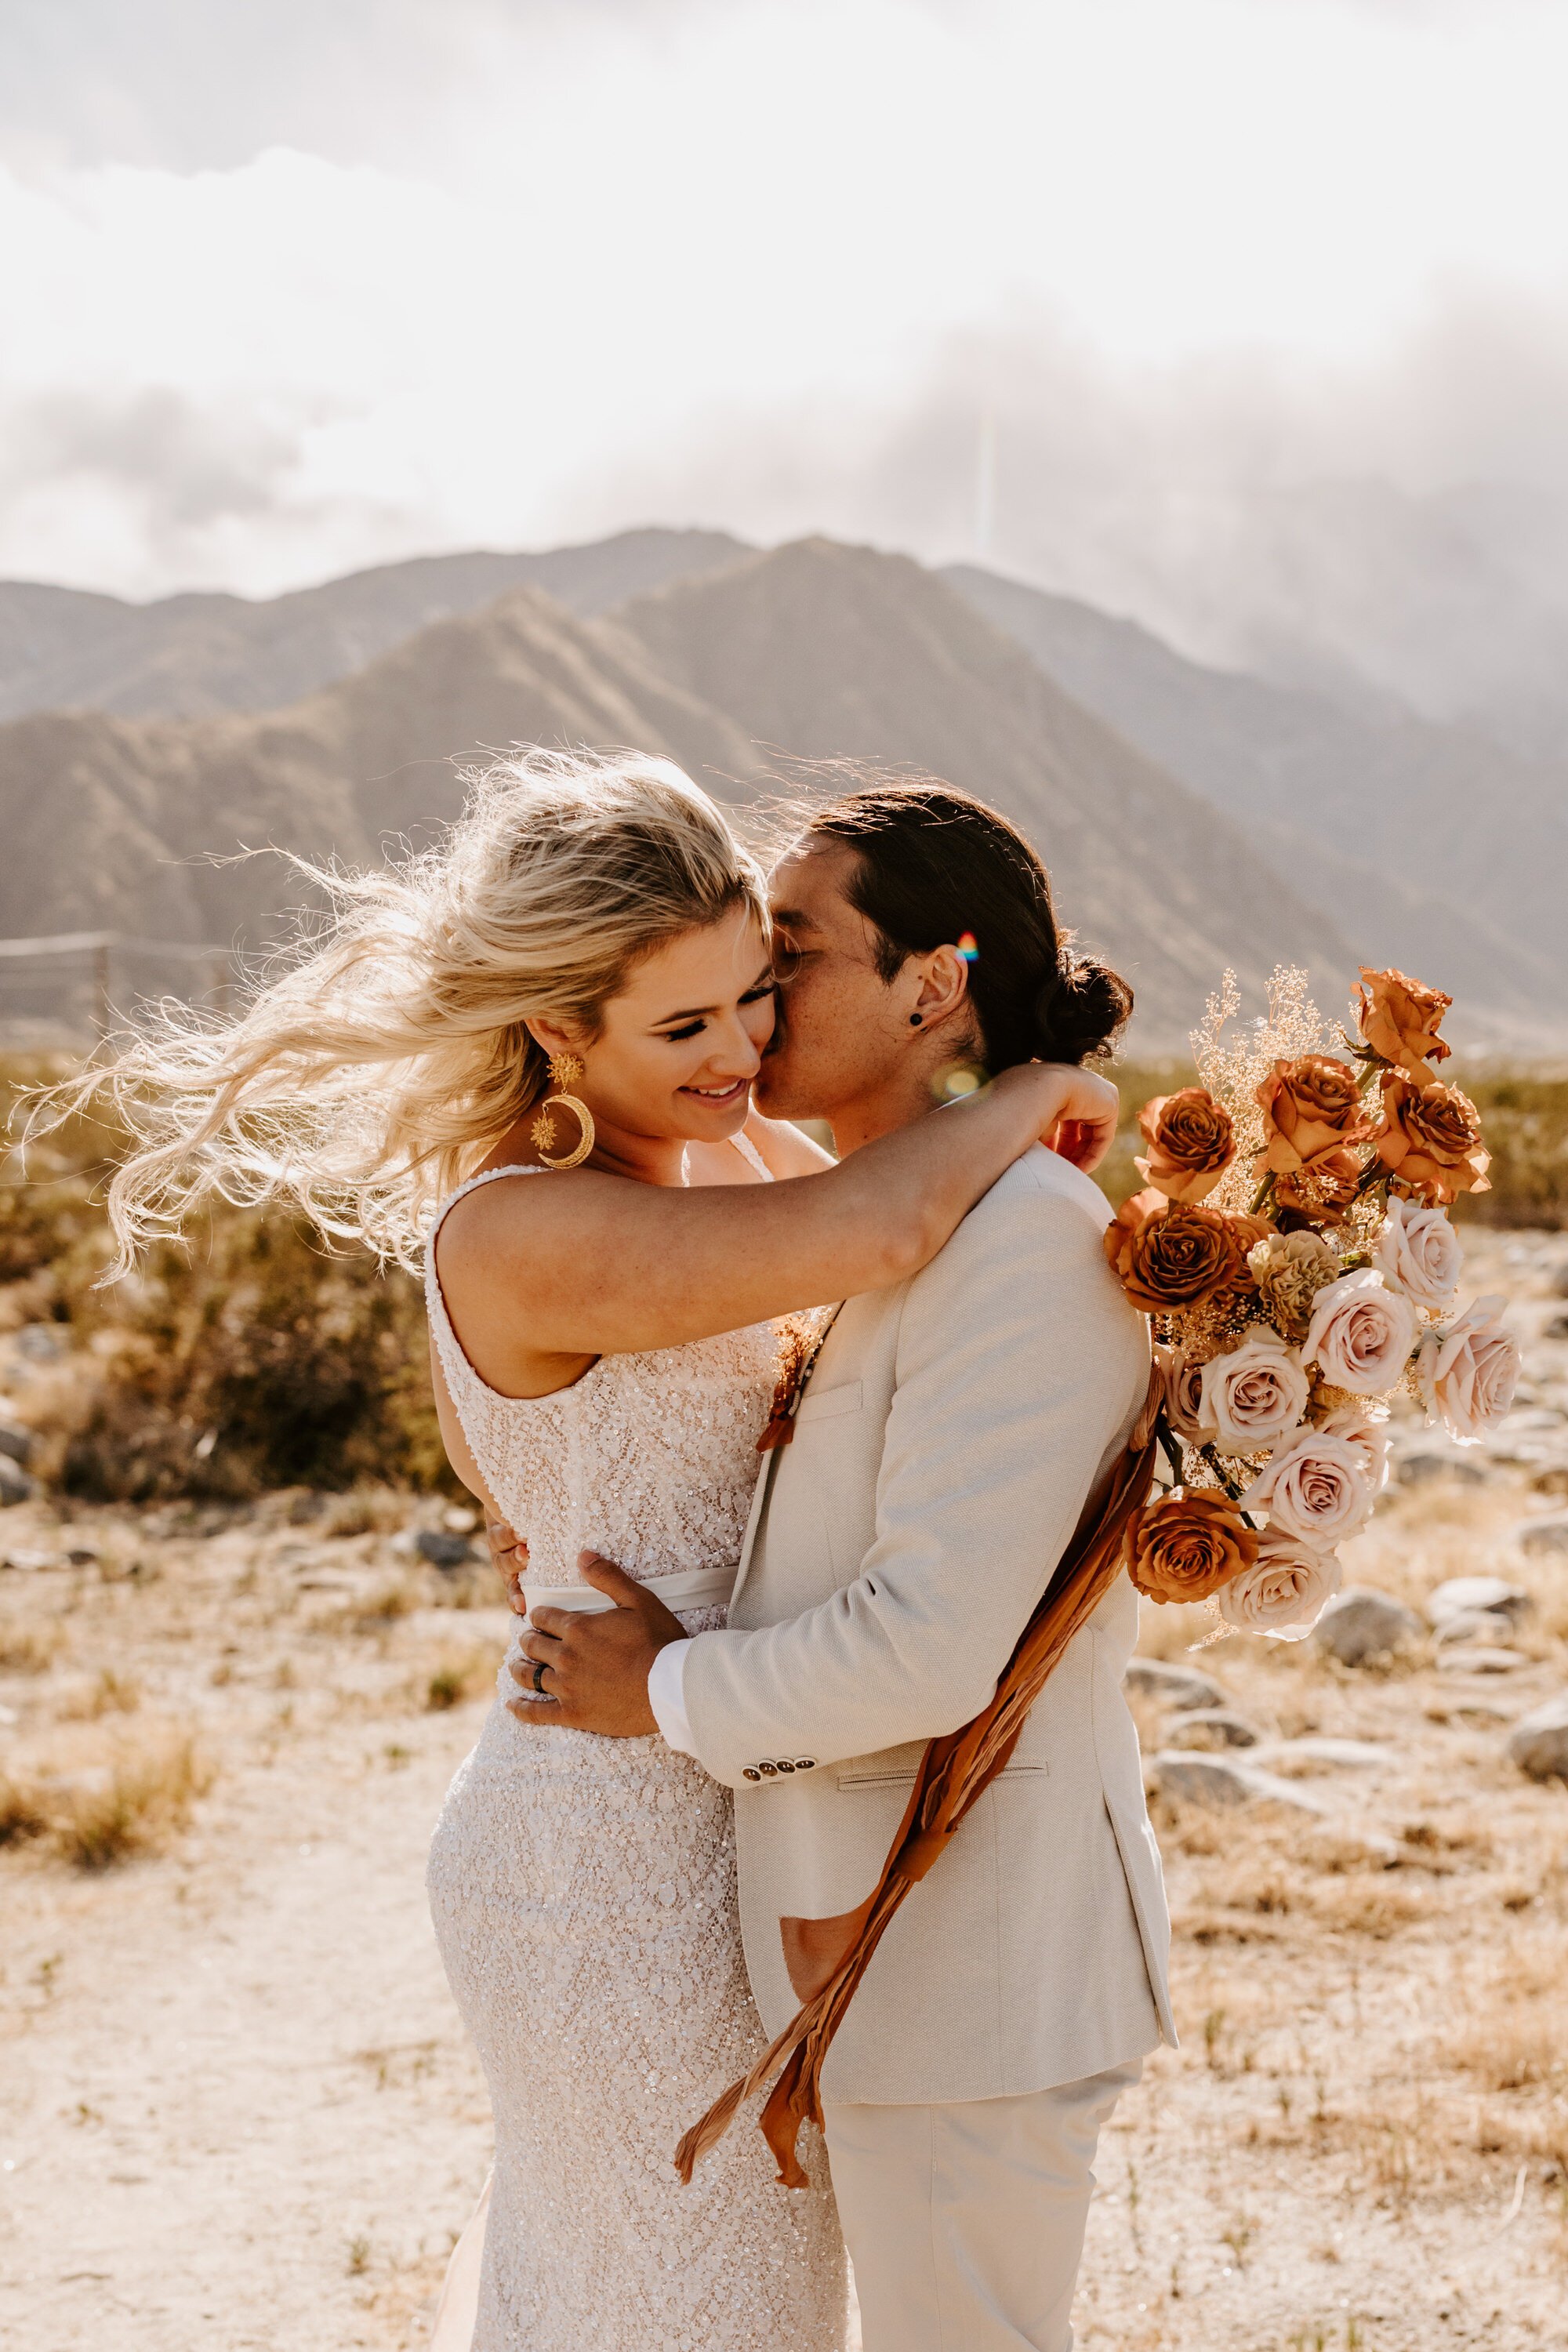 Palm Springs elopement | Palm Springs Wedding Photographer | Tida Svy | www.tidasvy.com